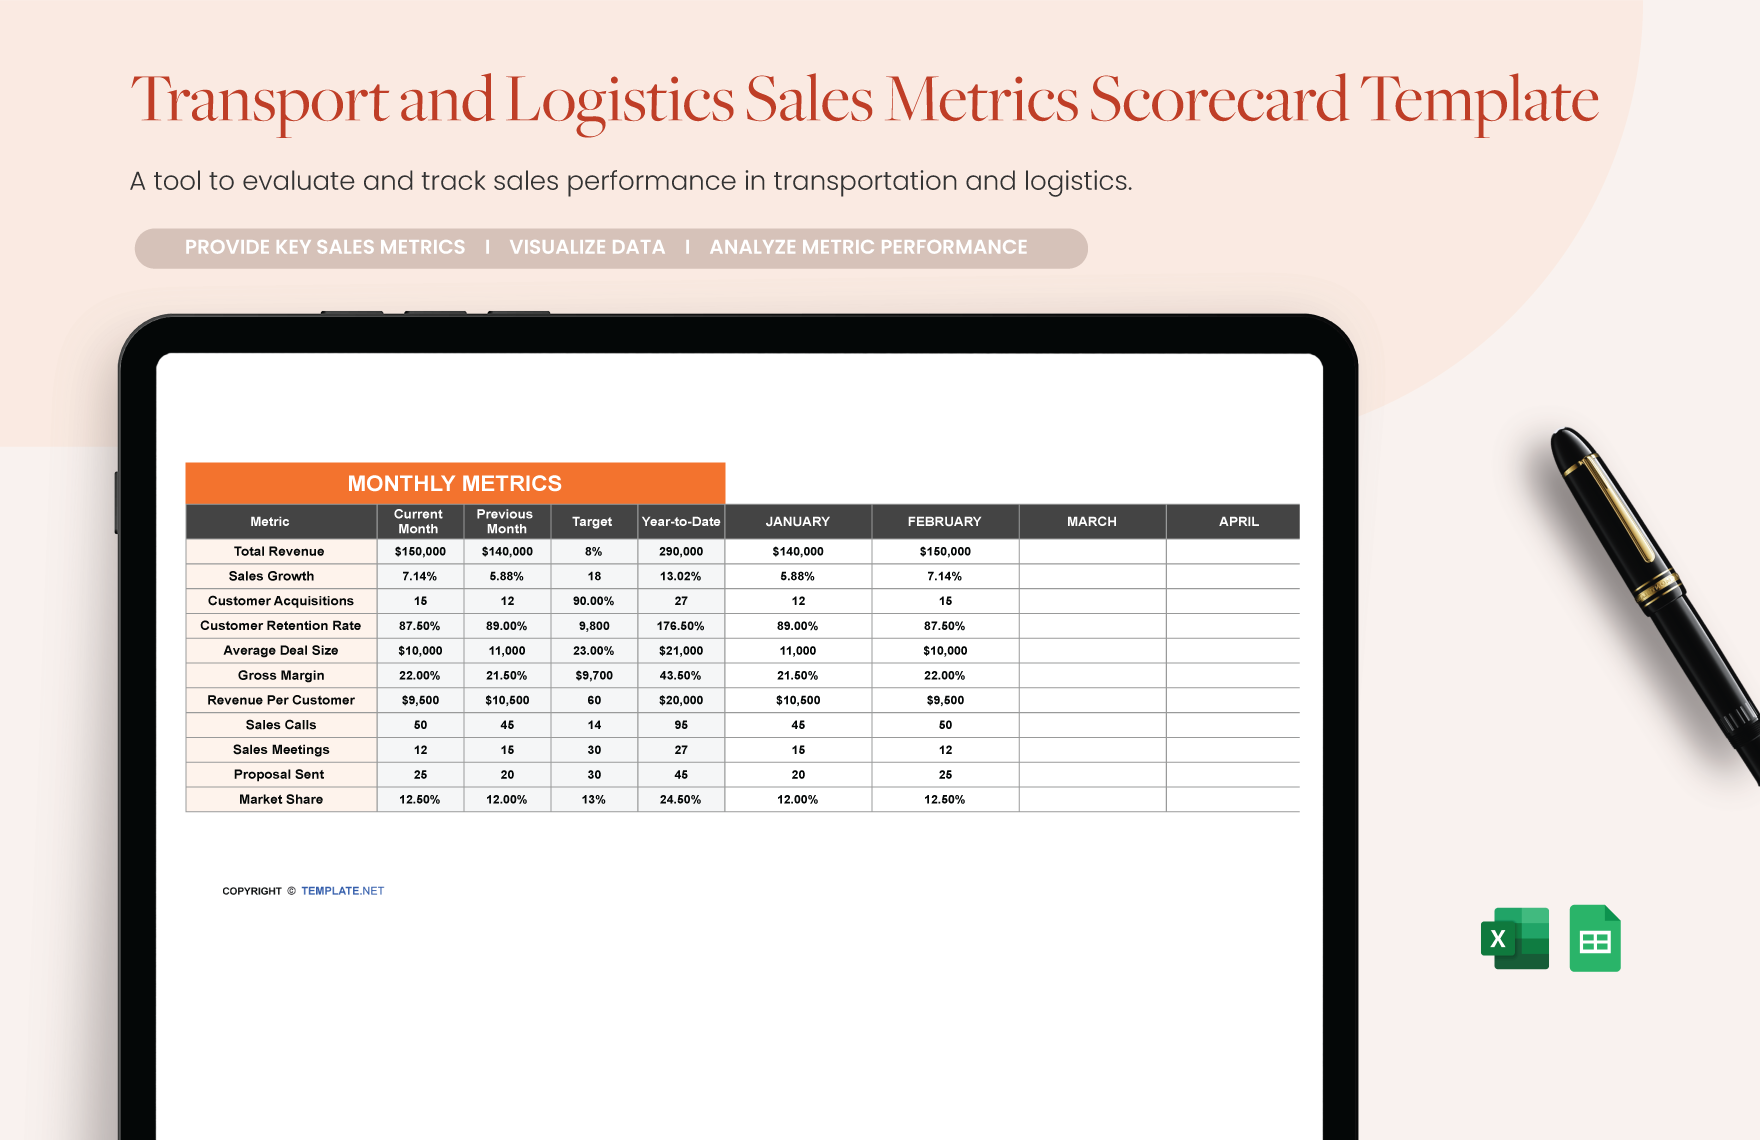 Transport and Logistics Sales Metrics Scorecard Template